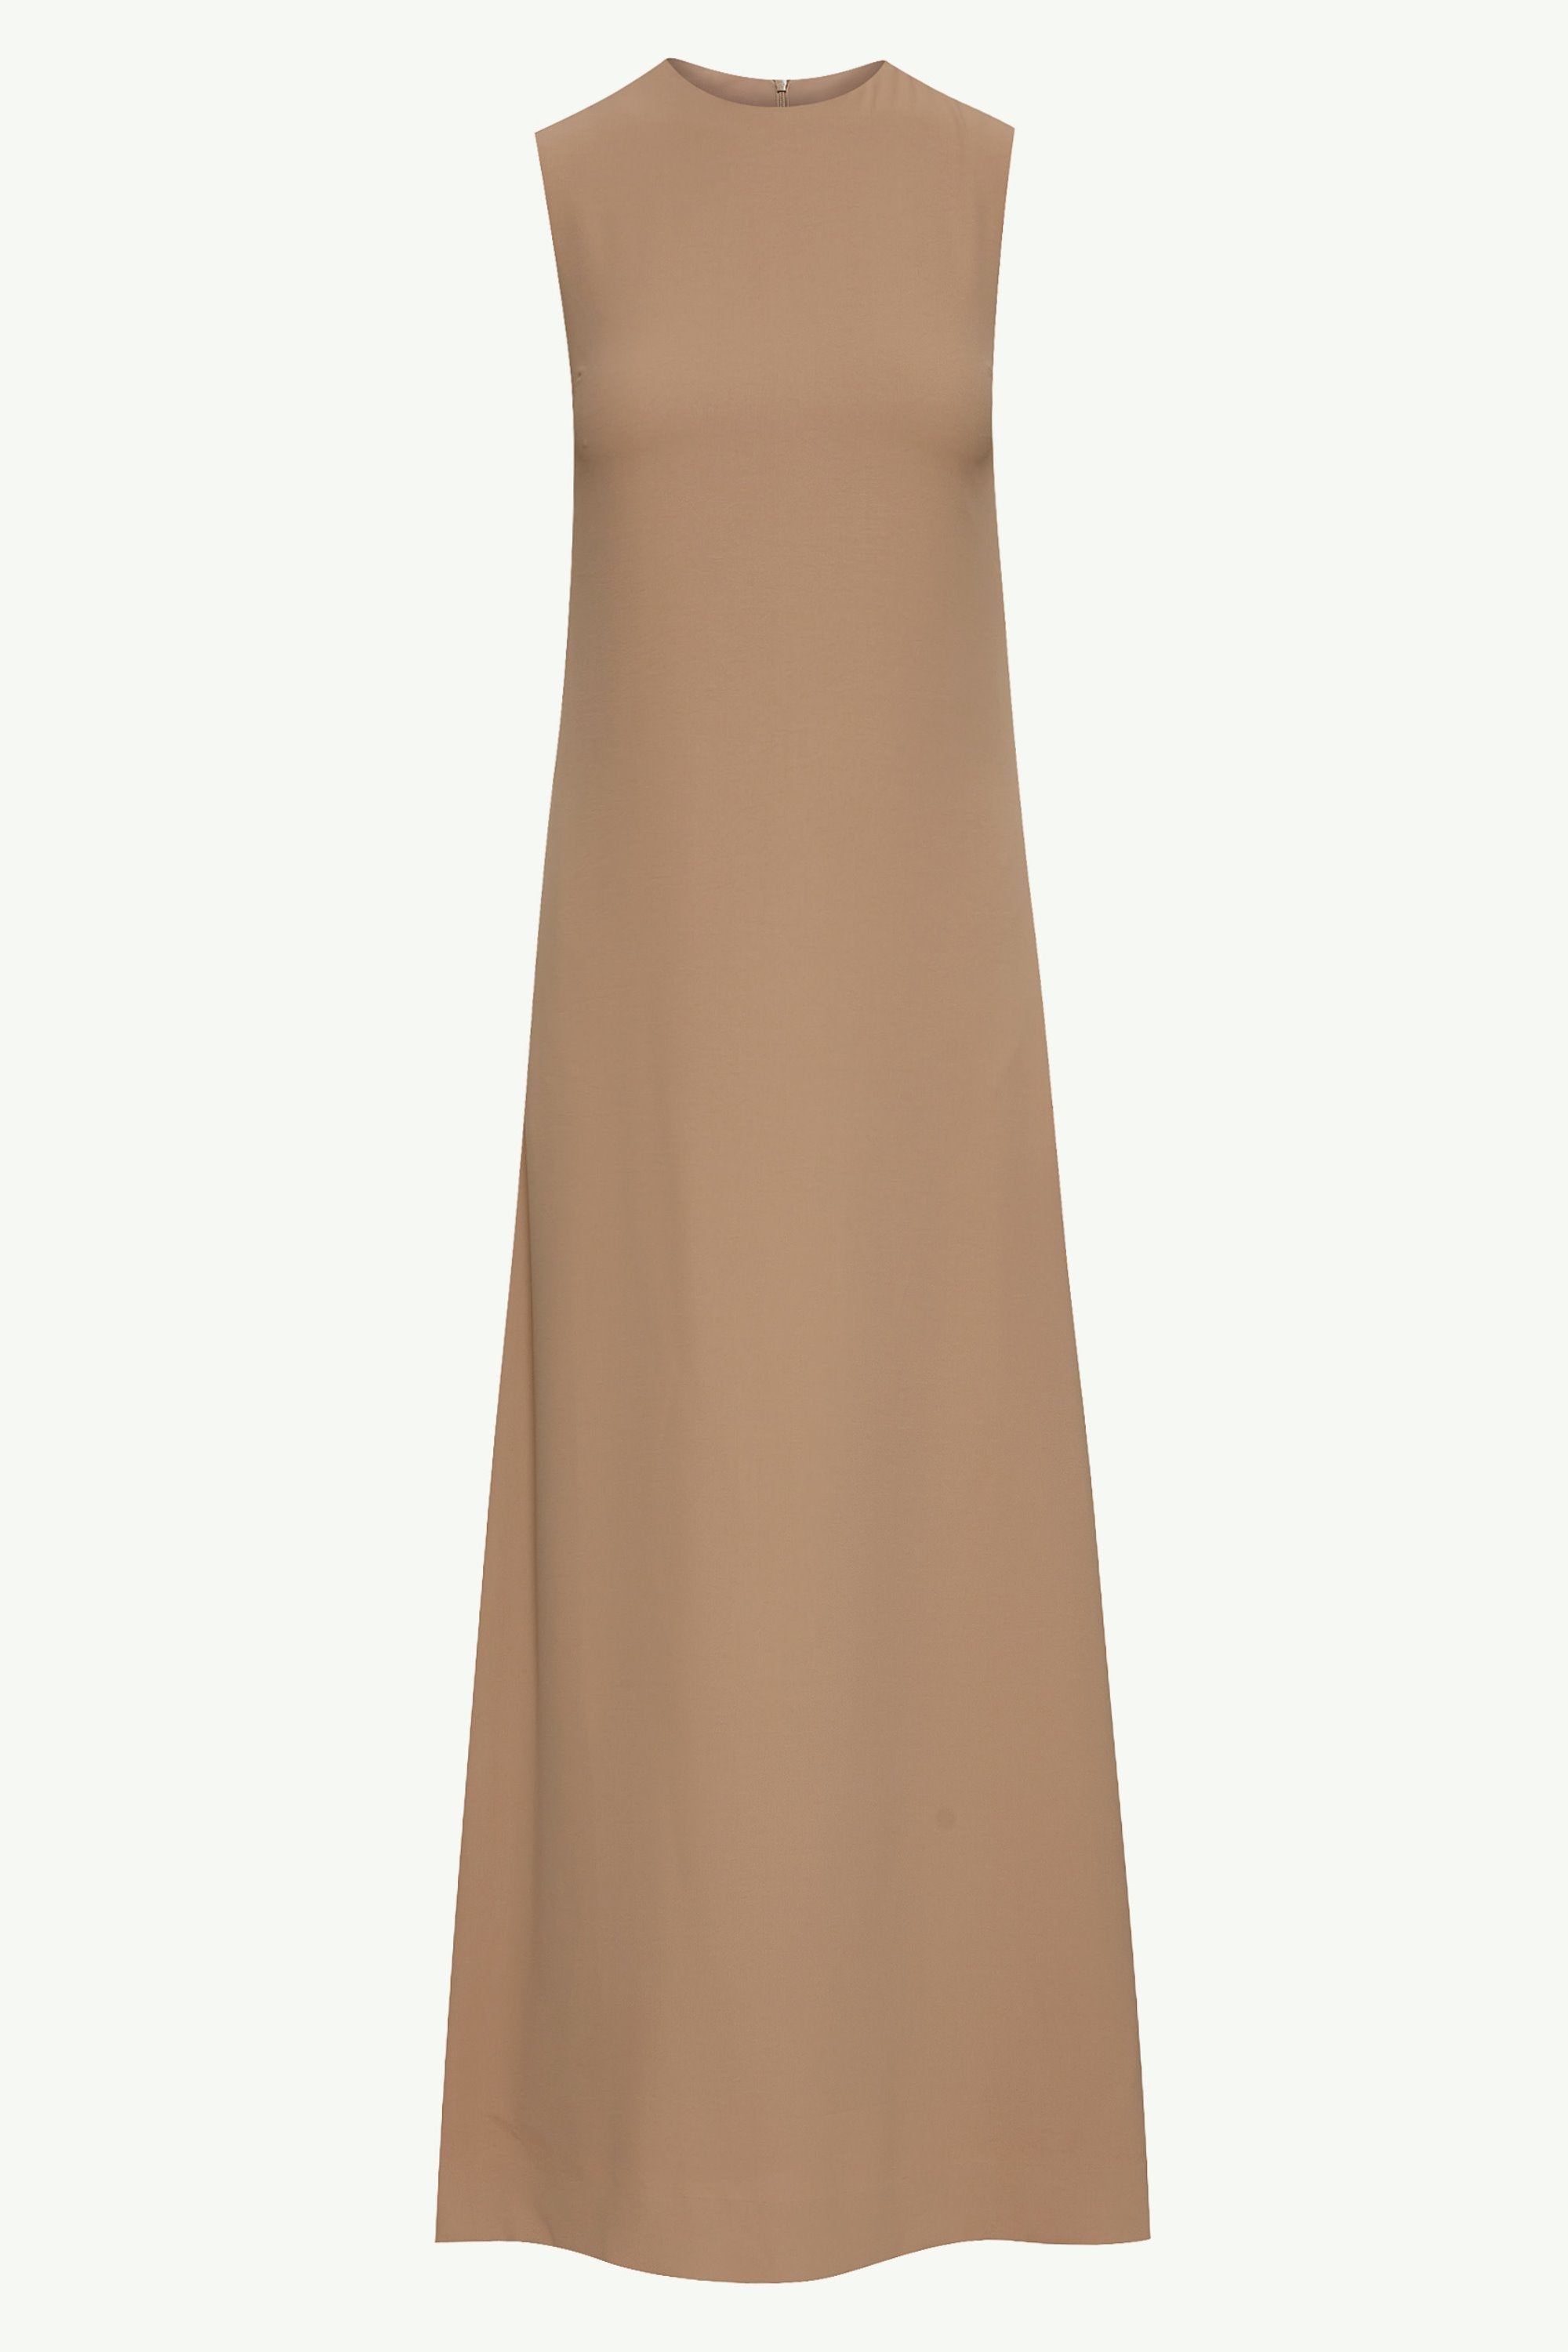 Essential Sleeveless Maxi Slip Dress - Caffe Clothing epschoolboard 